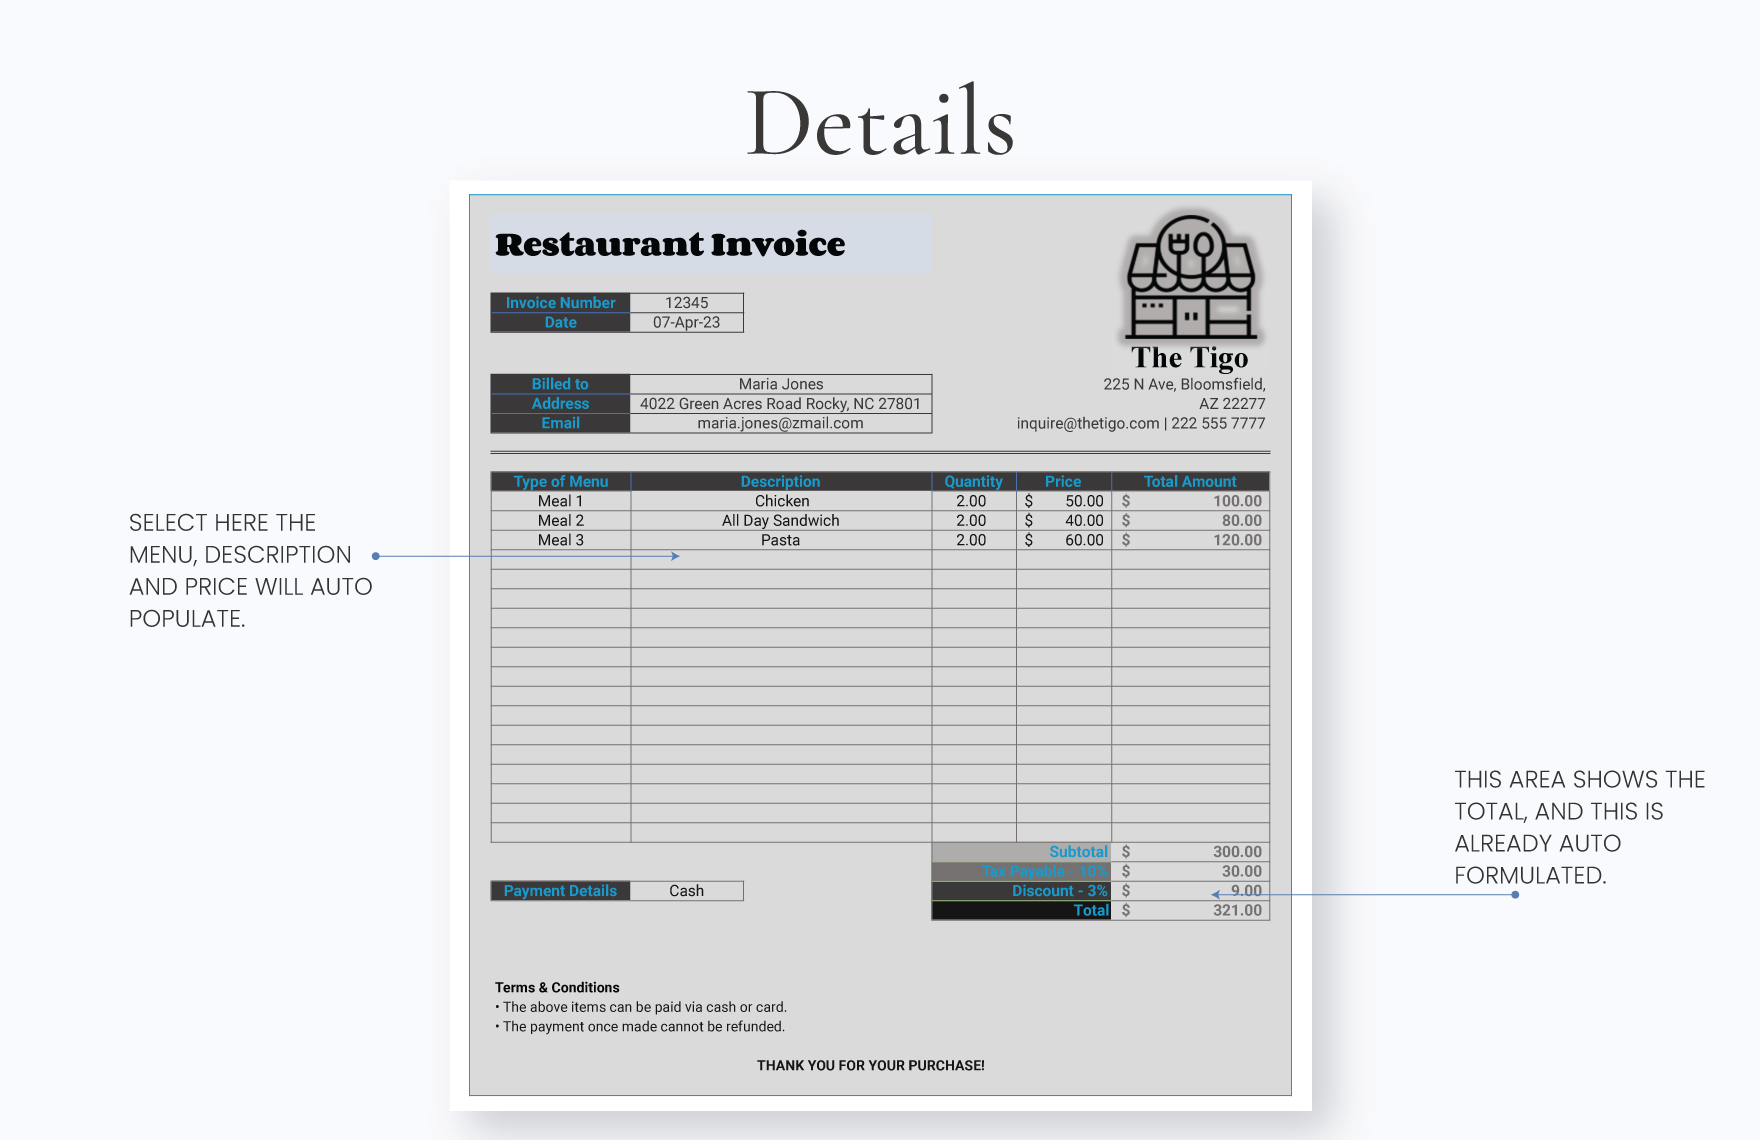 Restaurant Invoice Template Download in Word, Google Docs, Excel